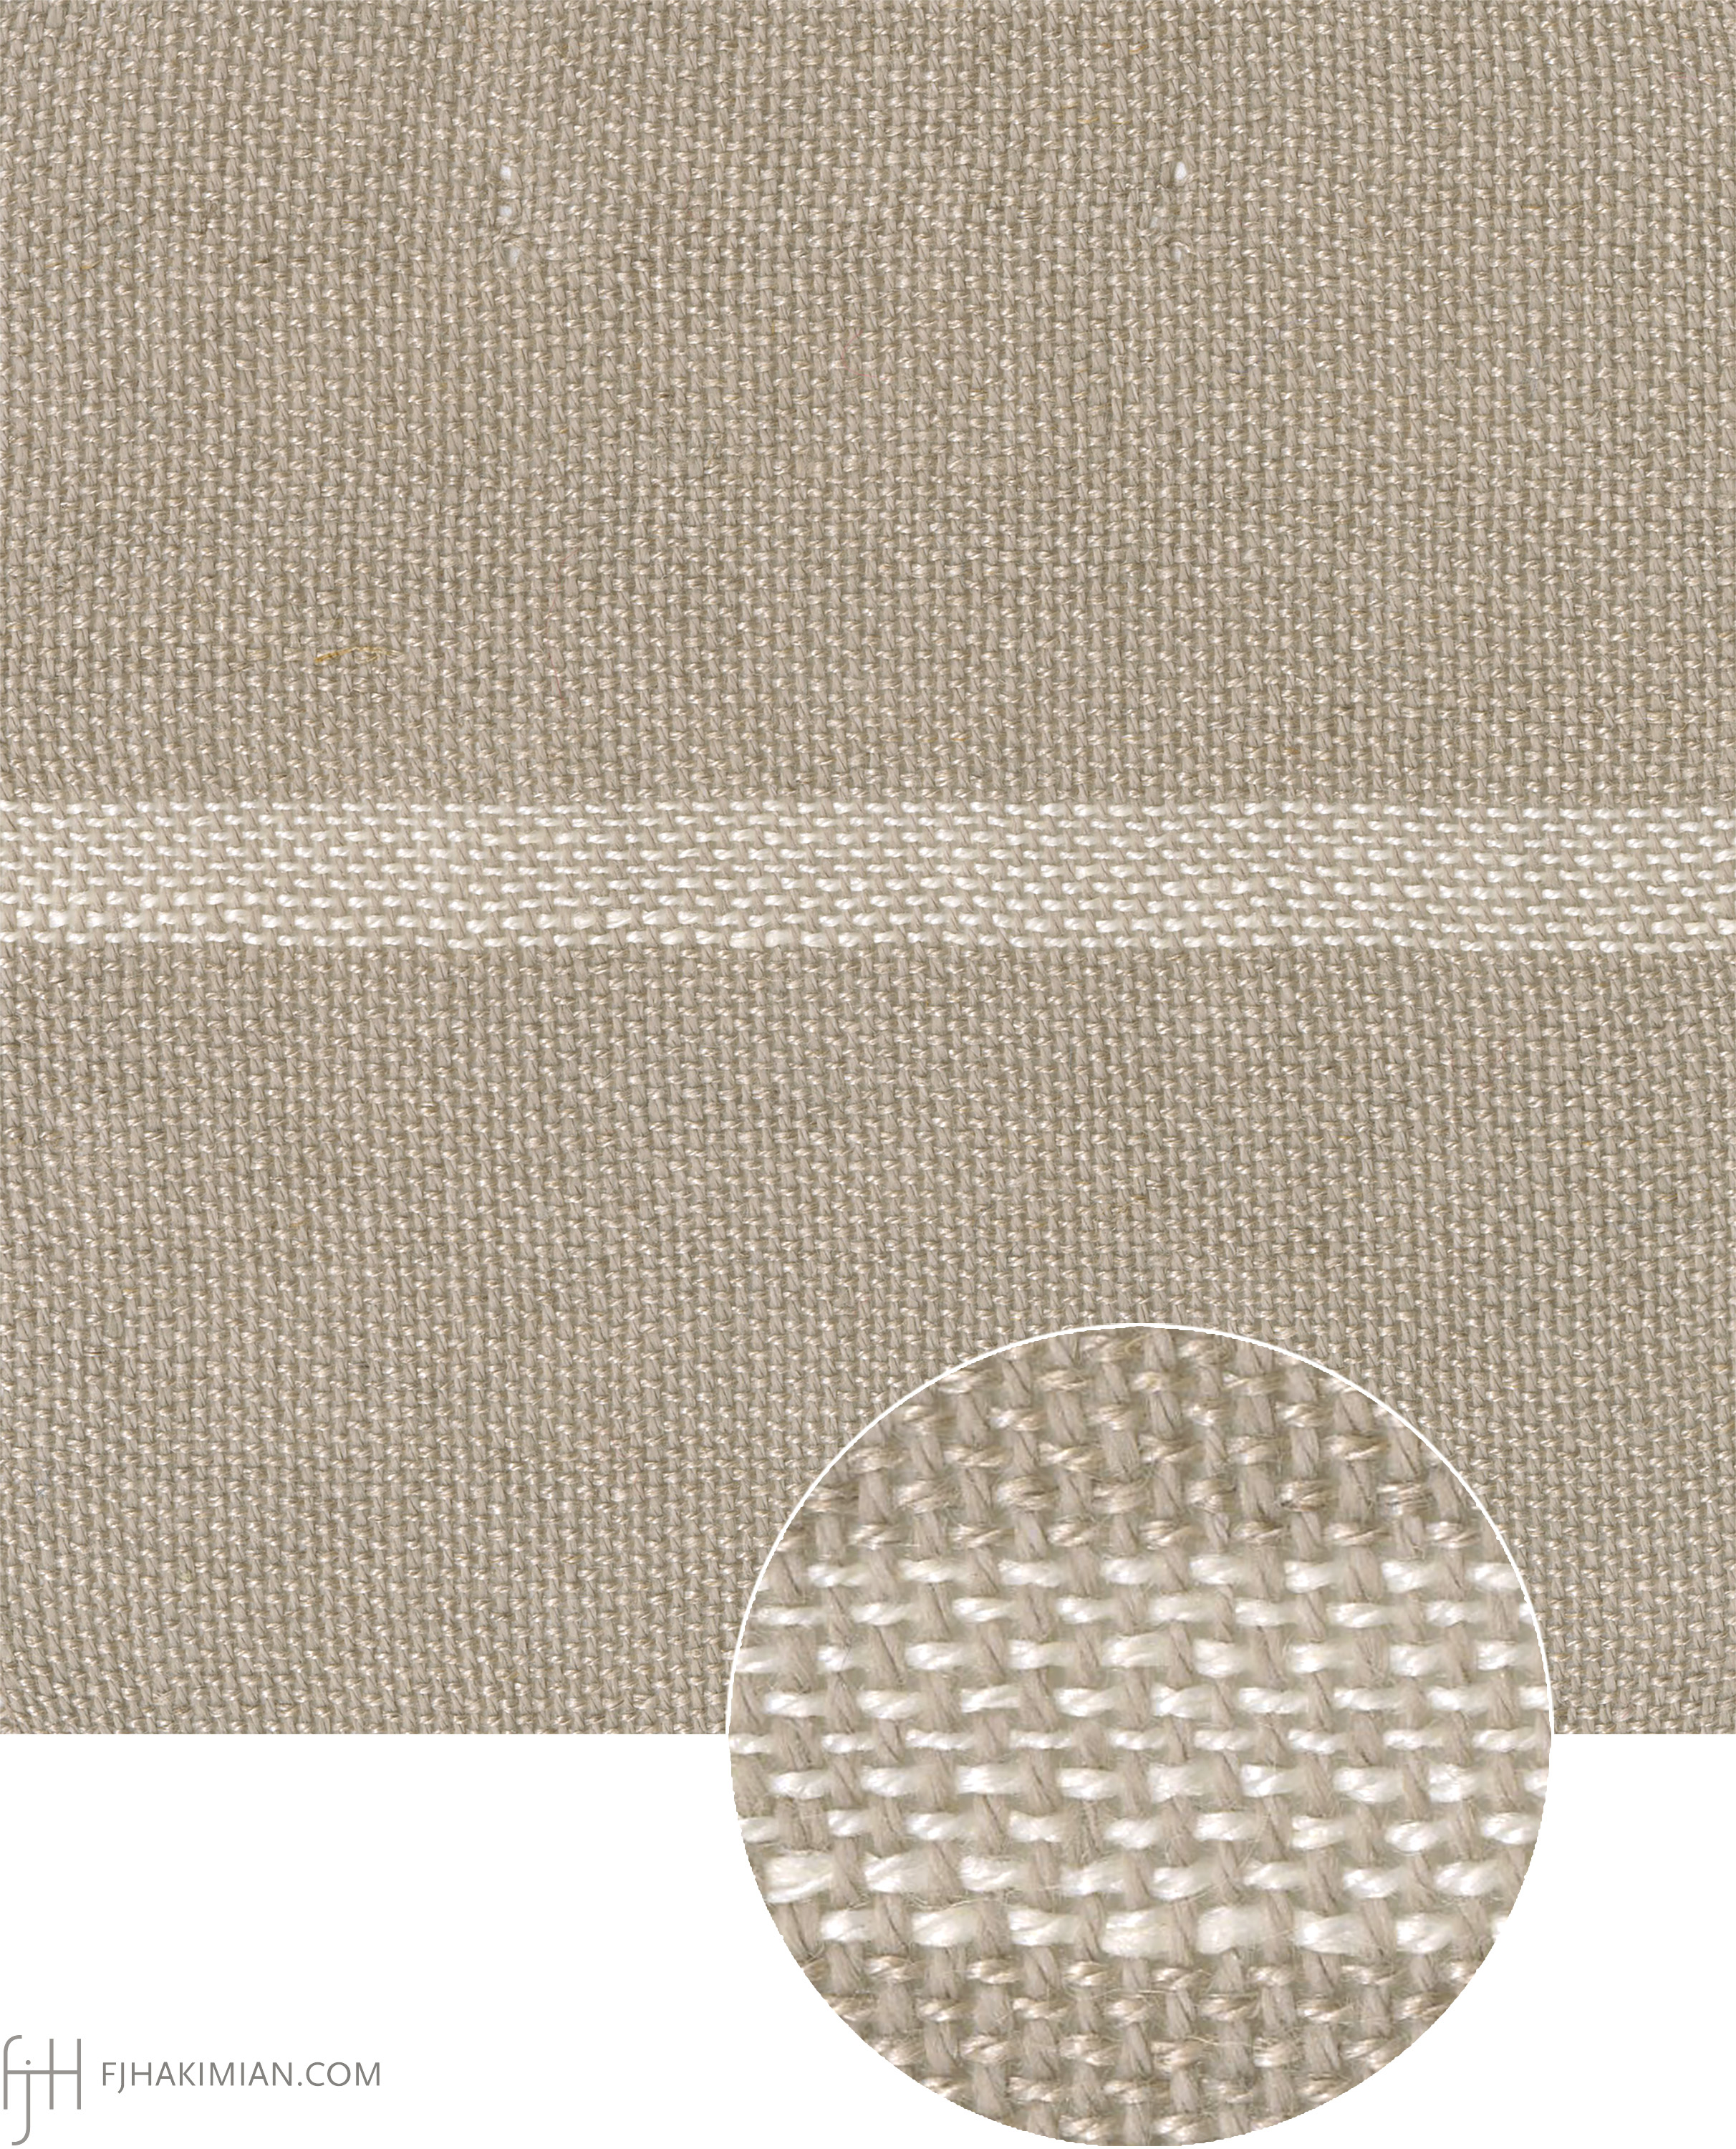 AB-LI-20 Upholstery Fabric | FJ Hakimian Carpet Gallery, New York 